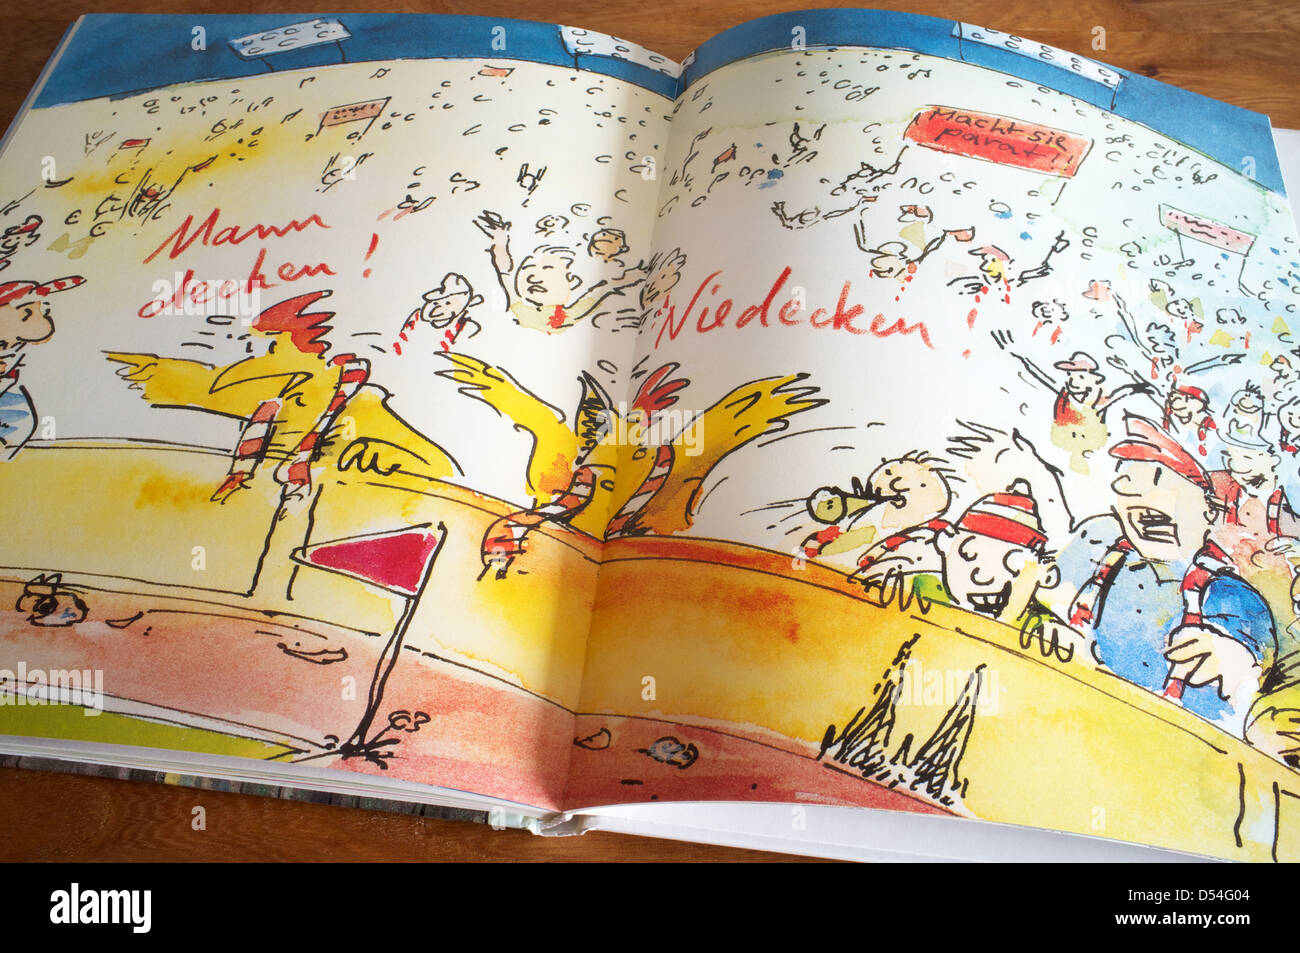 Koln mit Huhner Augen illustrated children's book Stock Photo